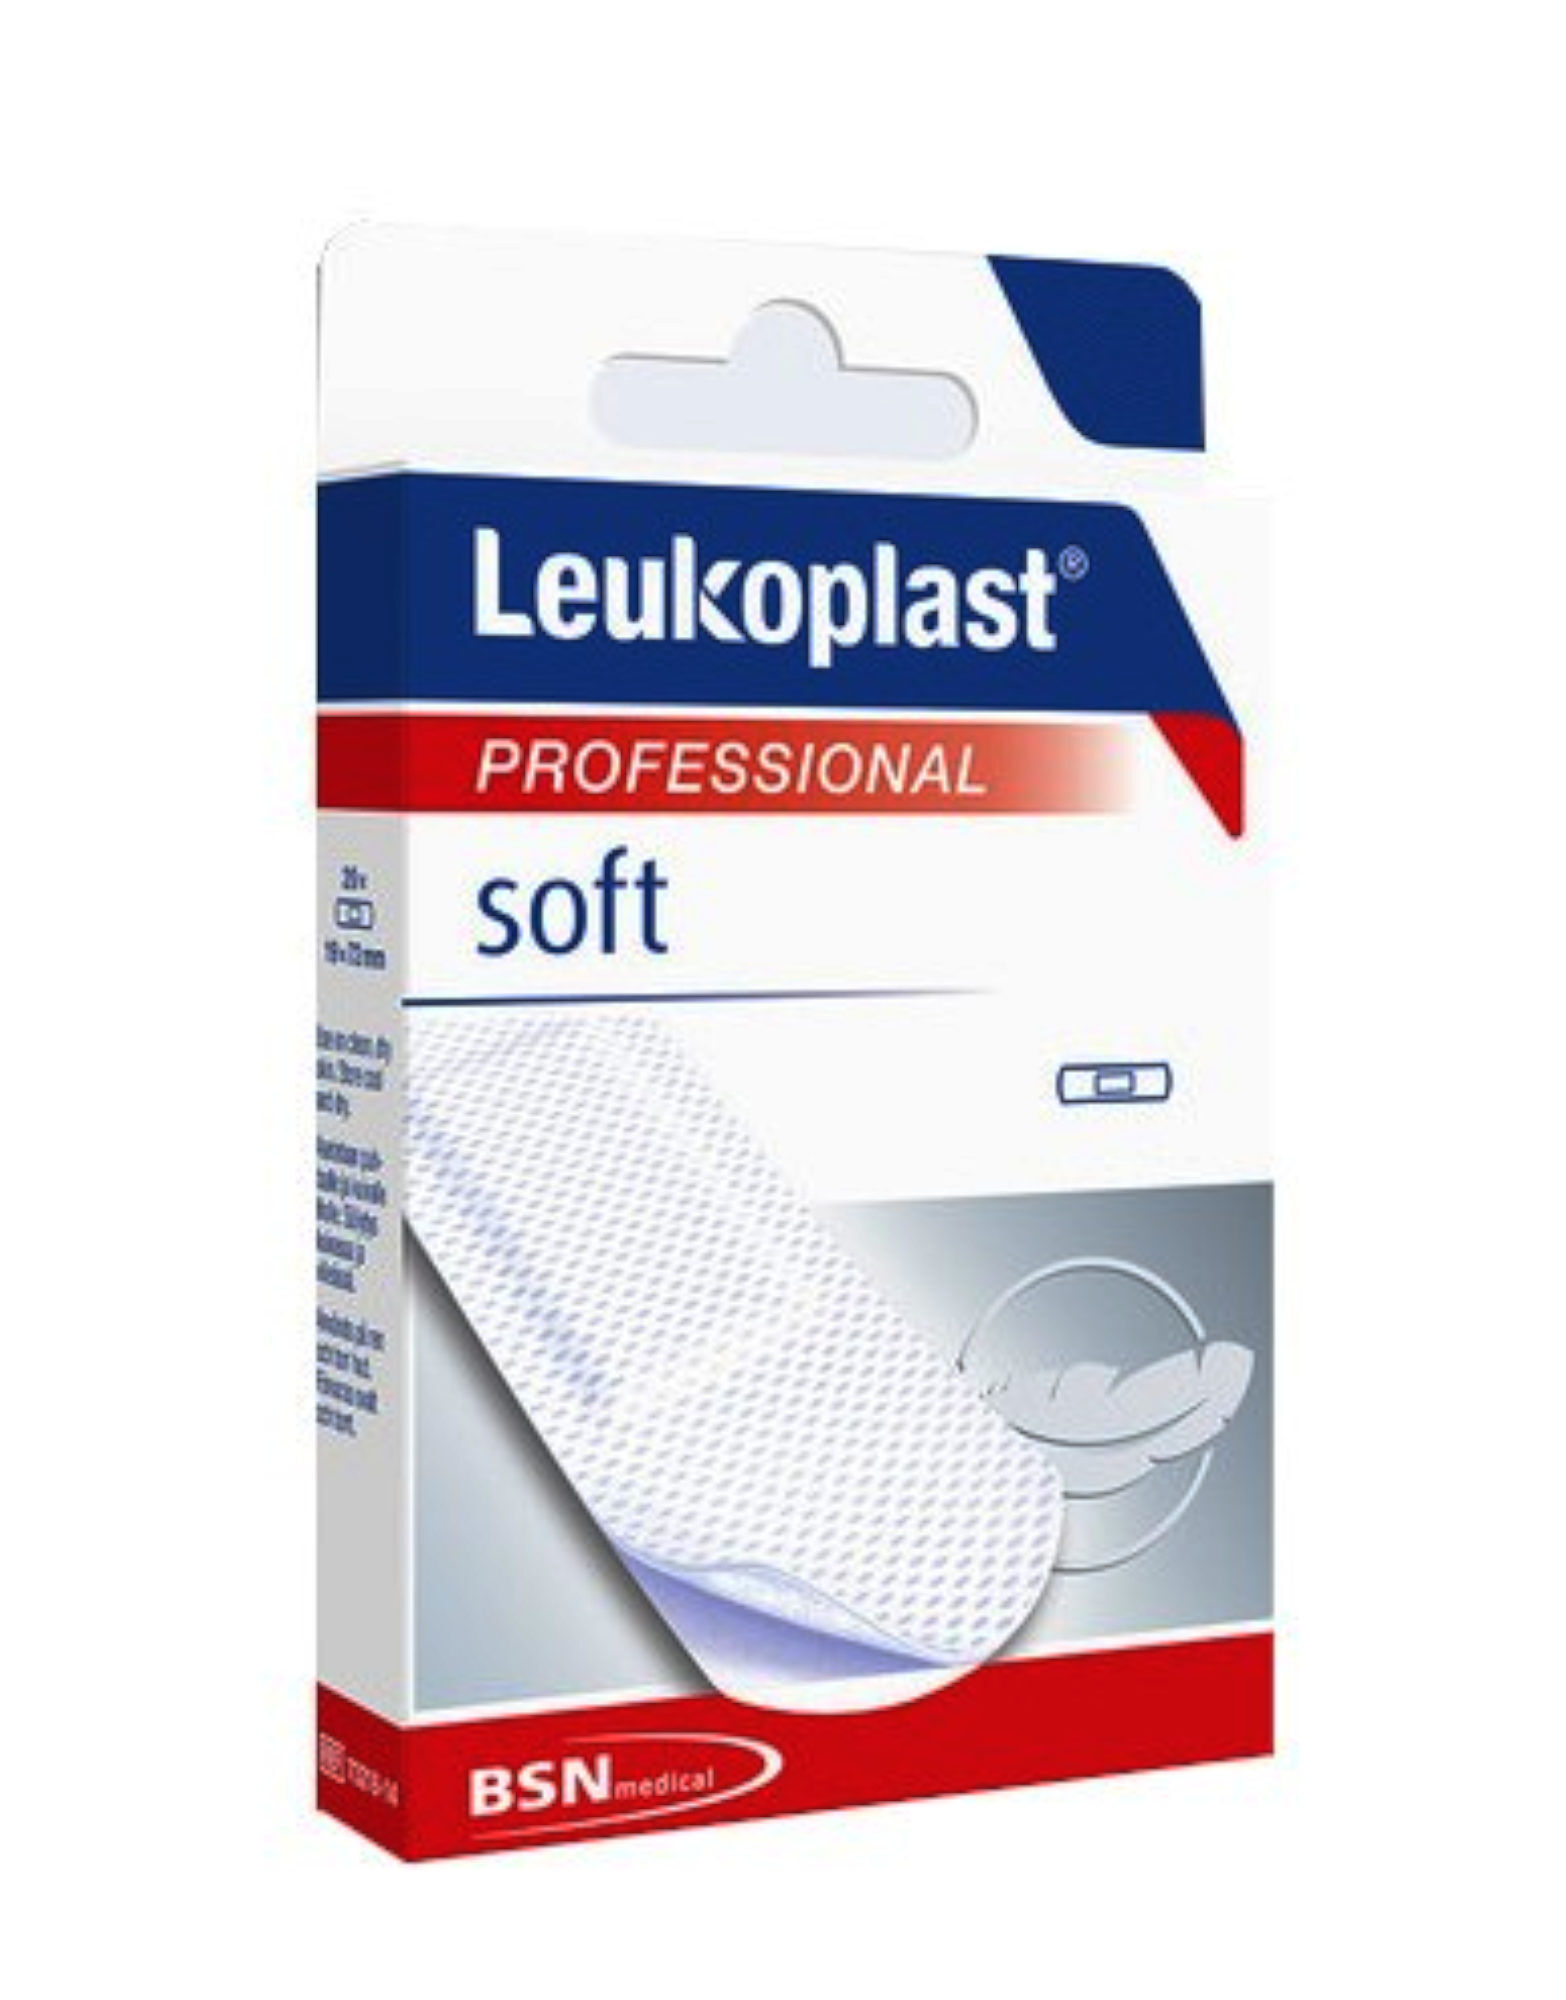 BSN MEDICAL Leukoplast - Soft 40 Cerotti